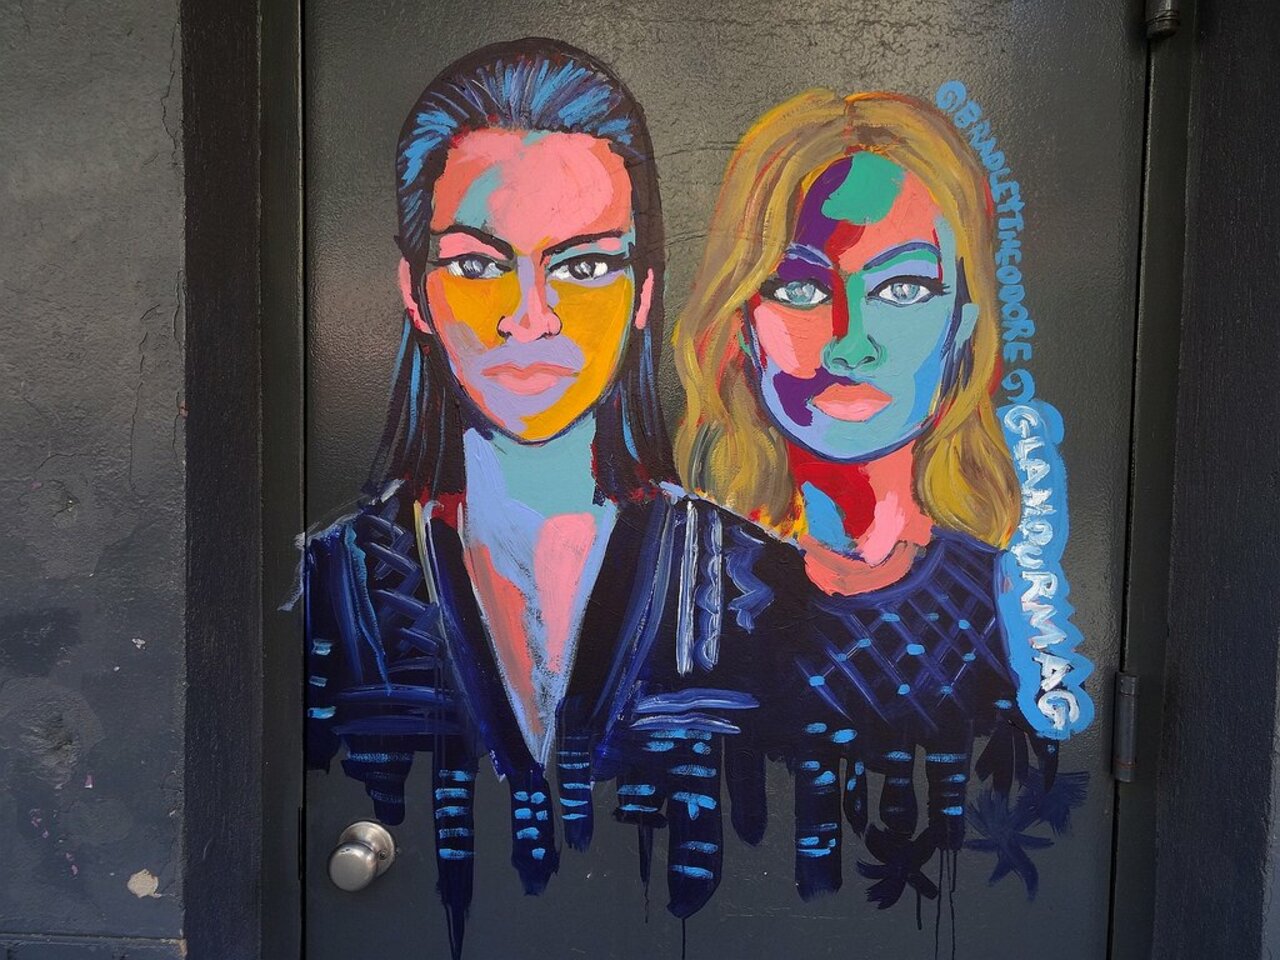 Street Art by Bradley Theodore in #New York http://www.urbacolors.com #art #mural #graffiti #streetart https://t.co/LRgITUfW2a